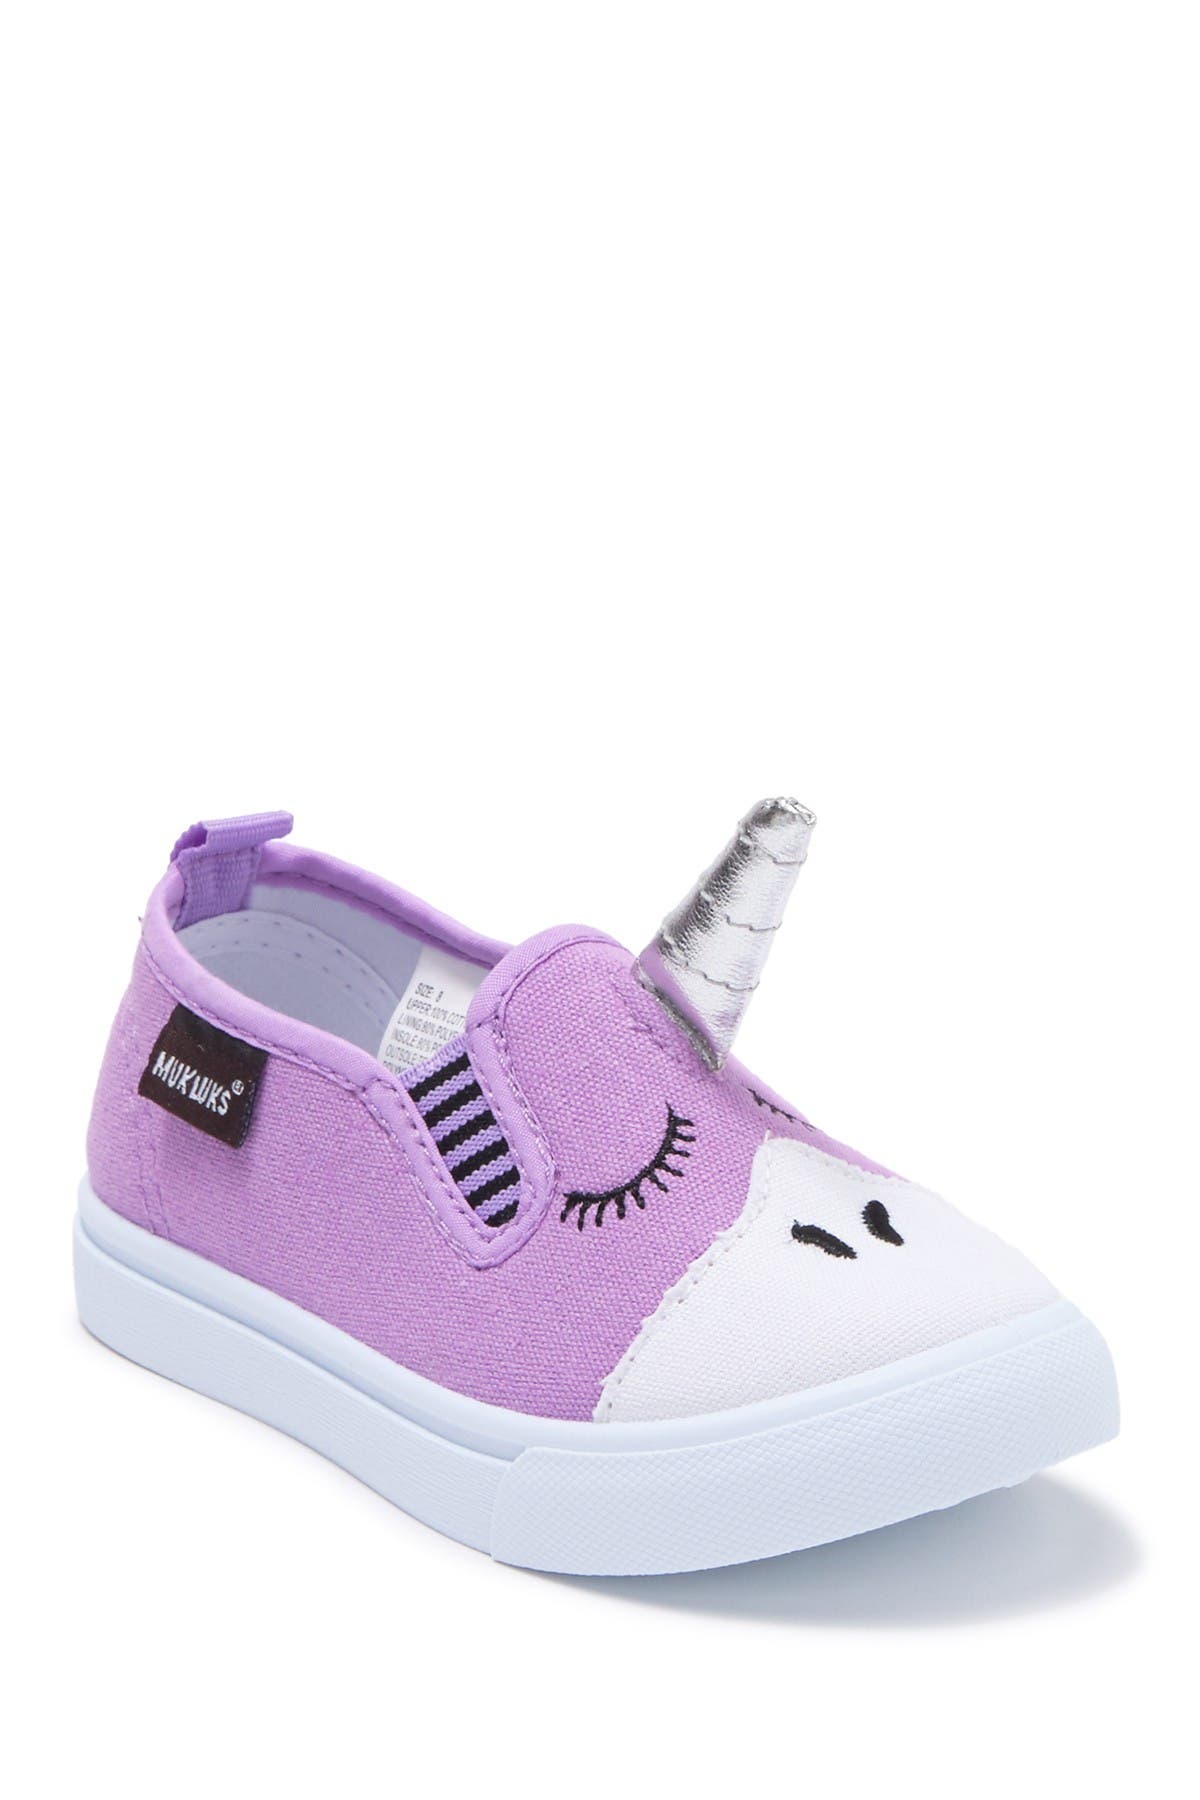 unicorn slip on sneakers